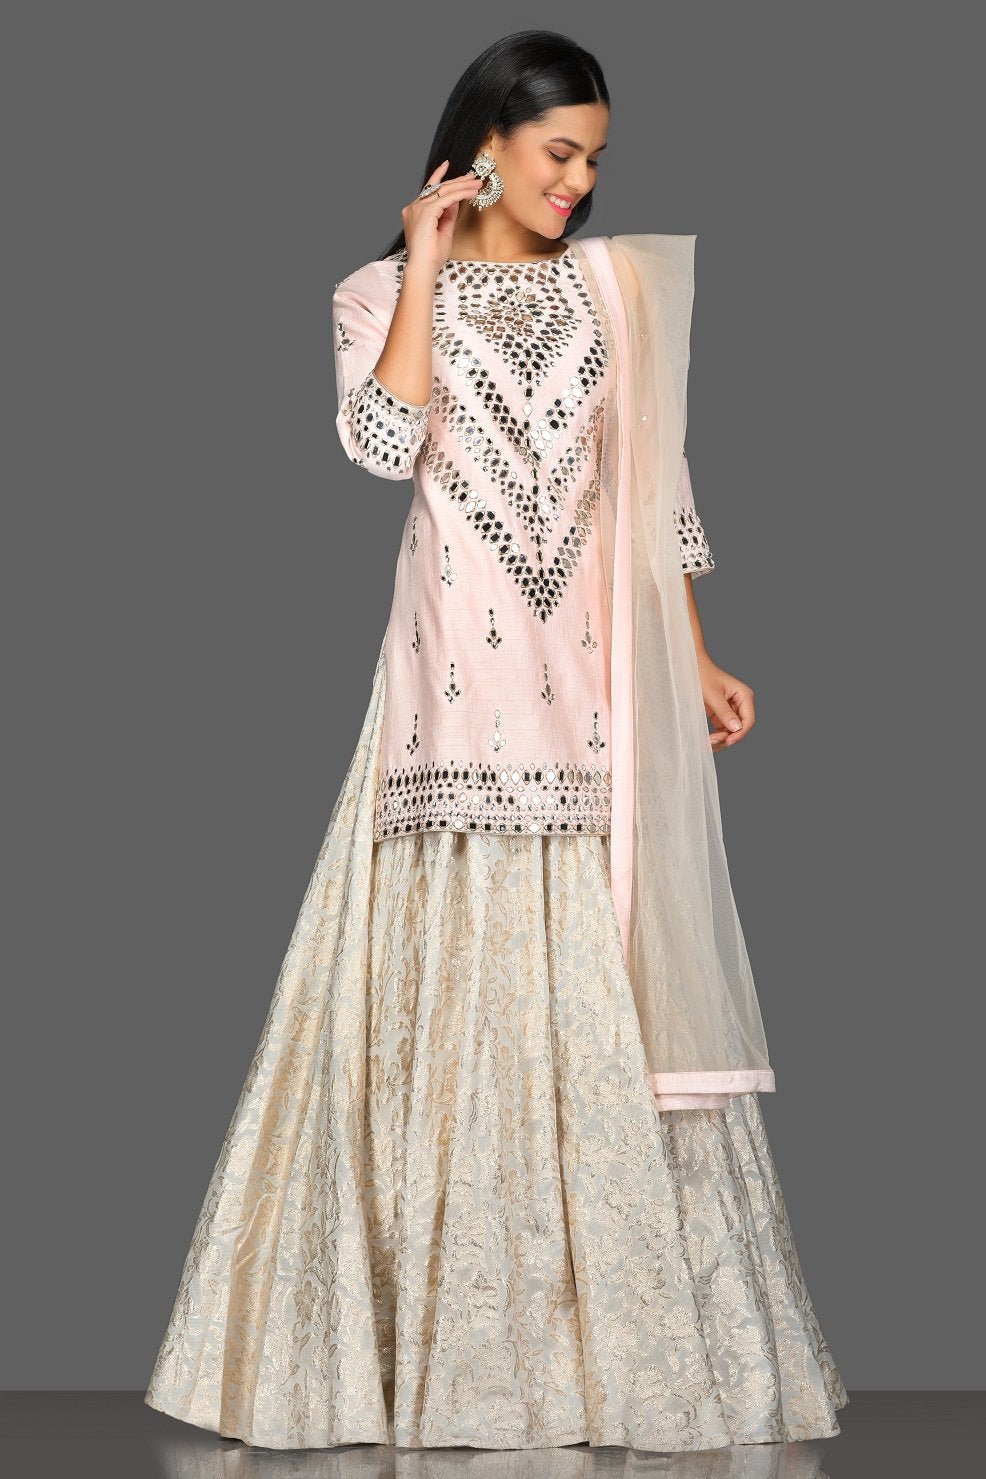 Readymade Indian Pakistani Wedding Salwar Kameez Designer Sharara Palazzo  Suit | eBay